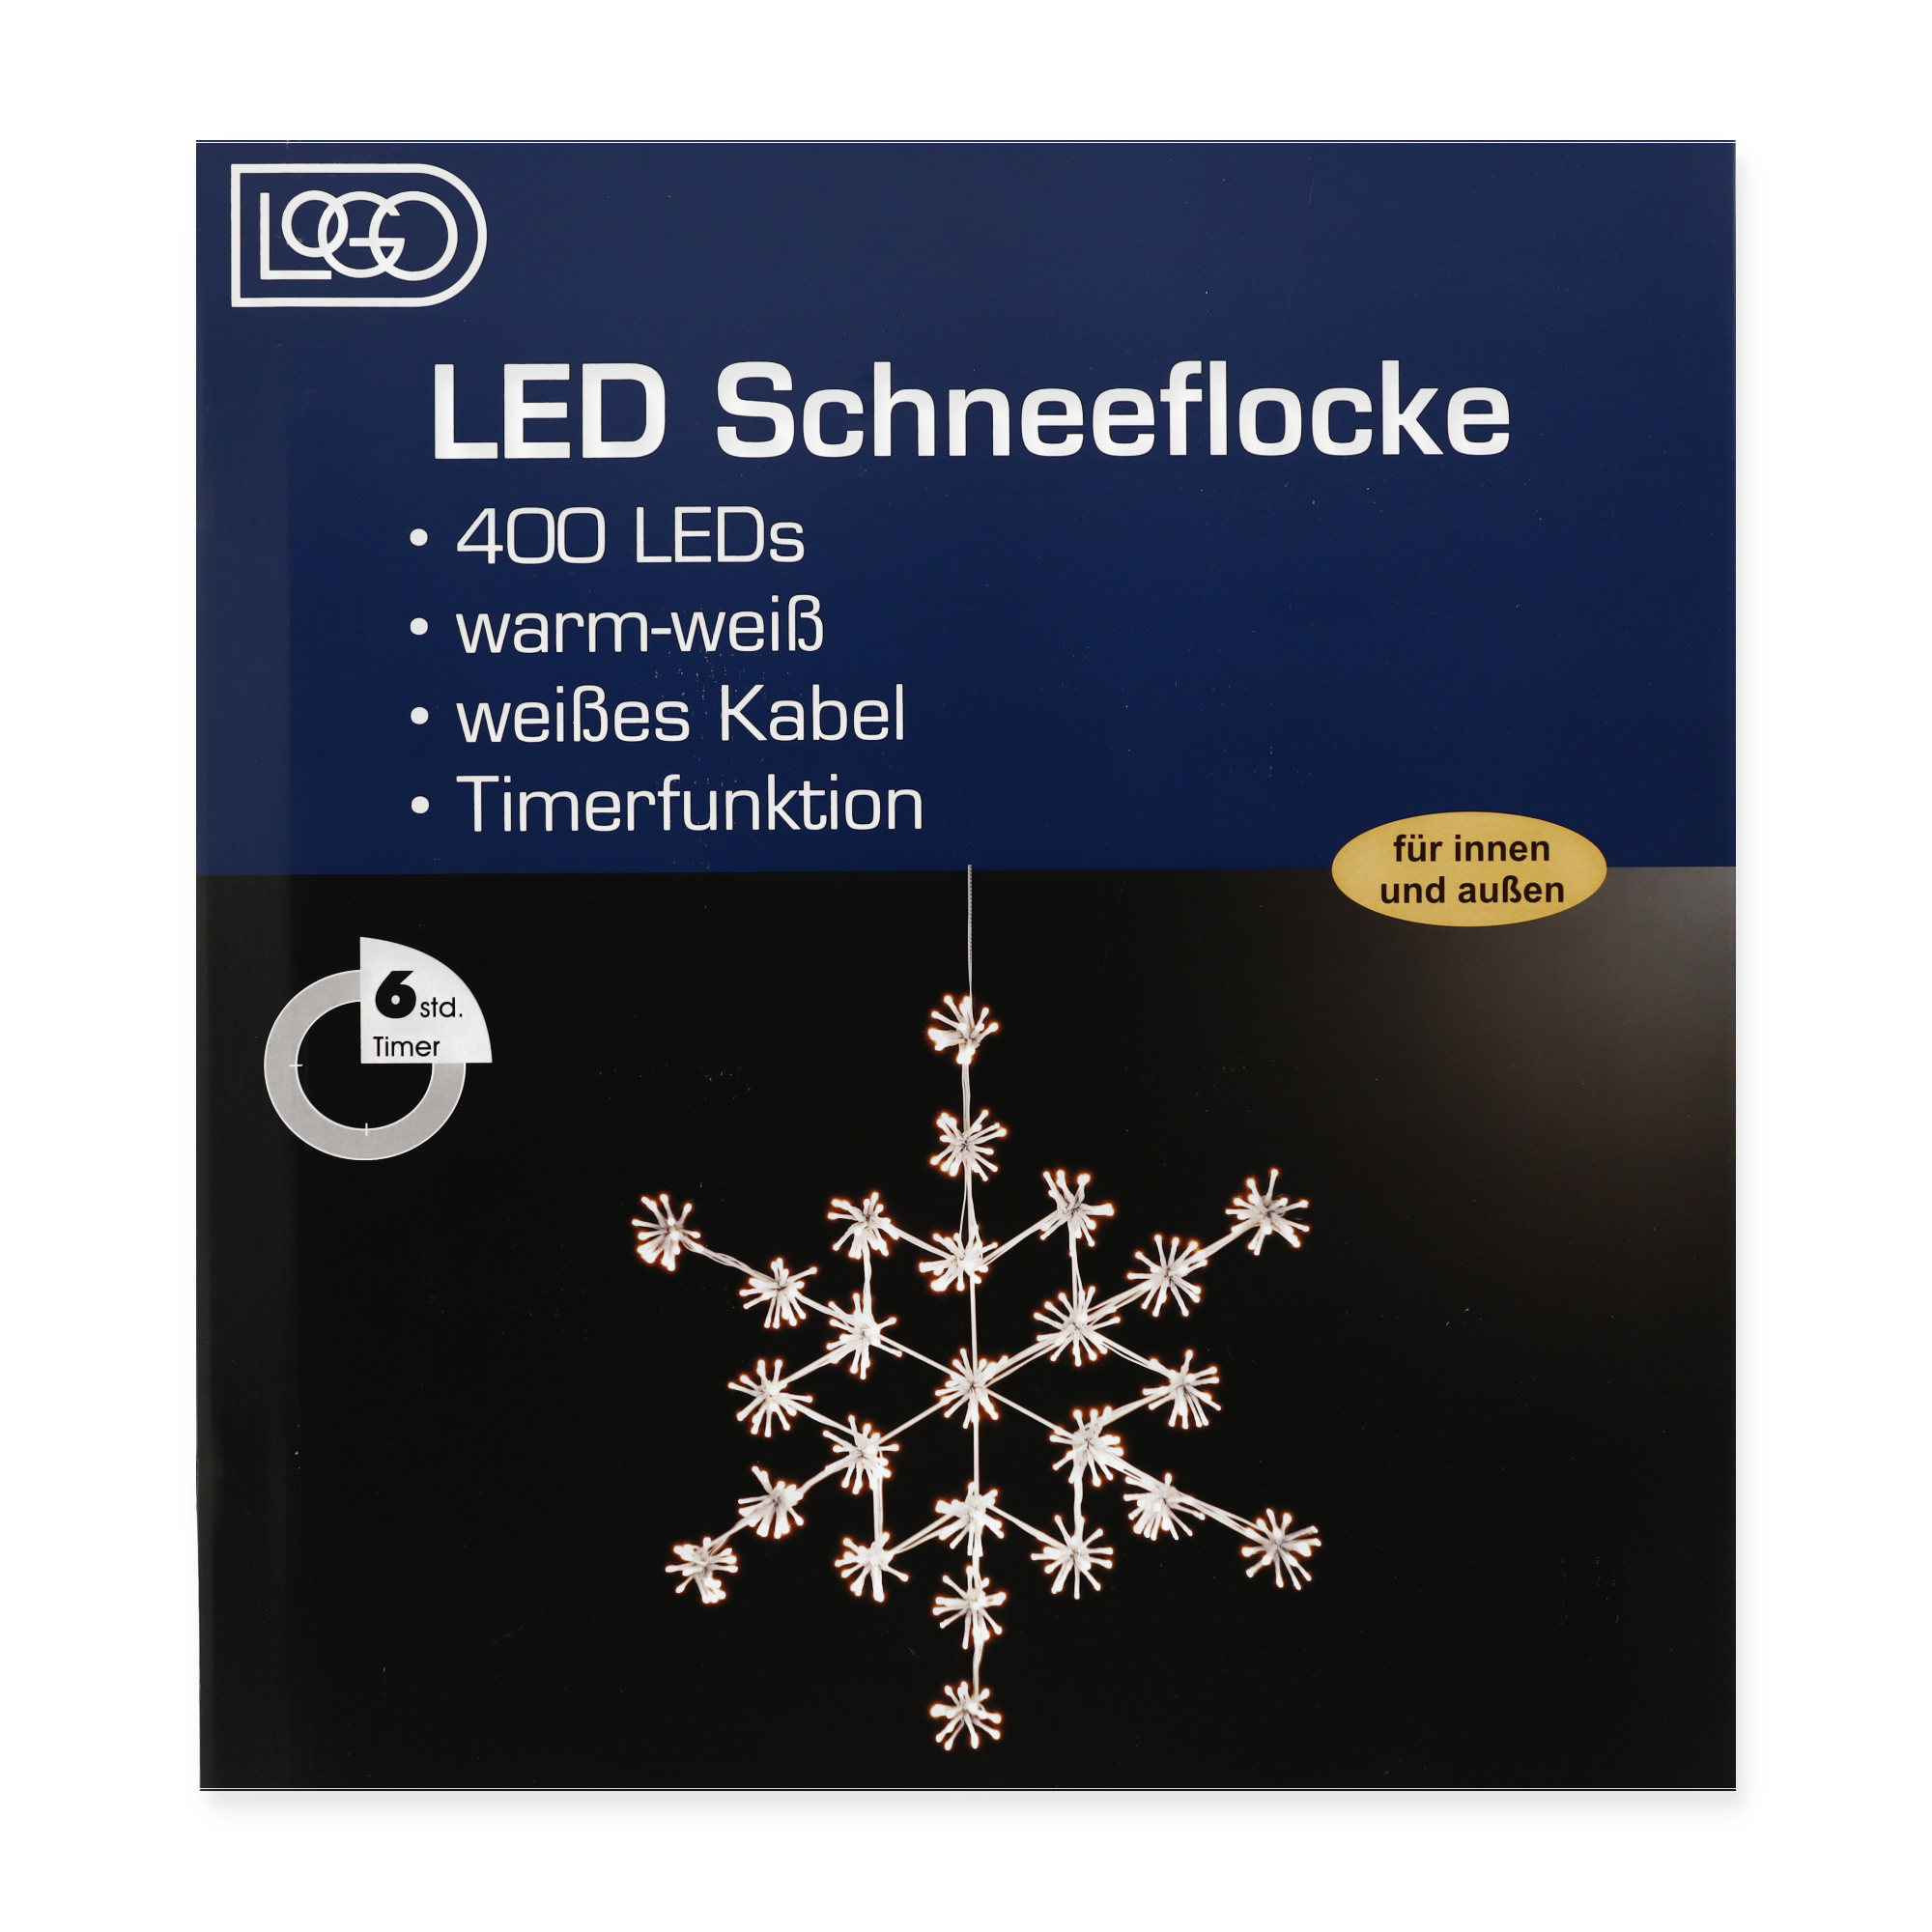 LED-Metall-Schneeflocke 400 LEDs warmweiß Ø 60 cm + product picture